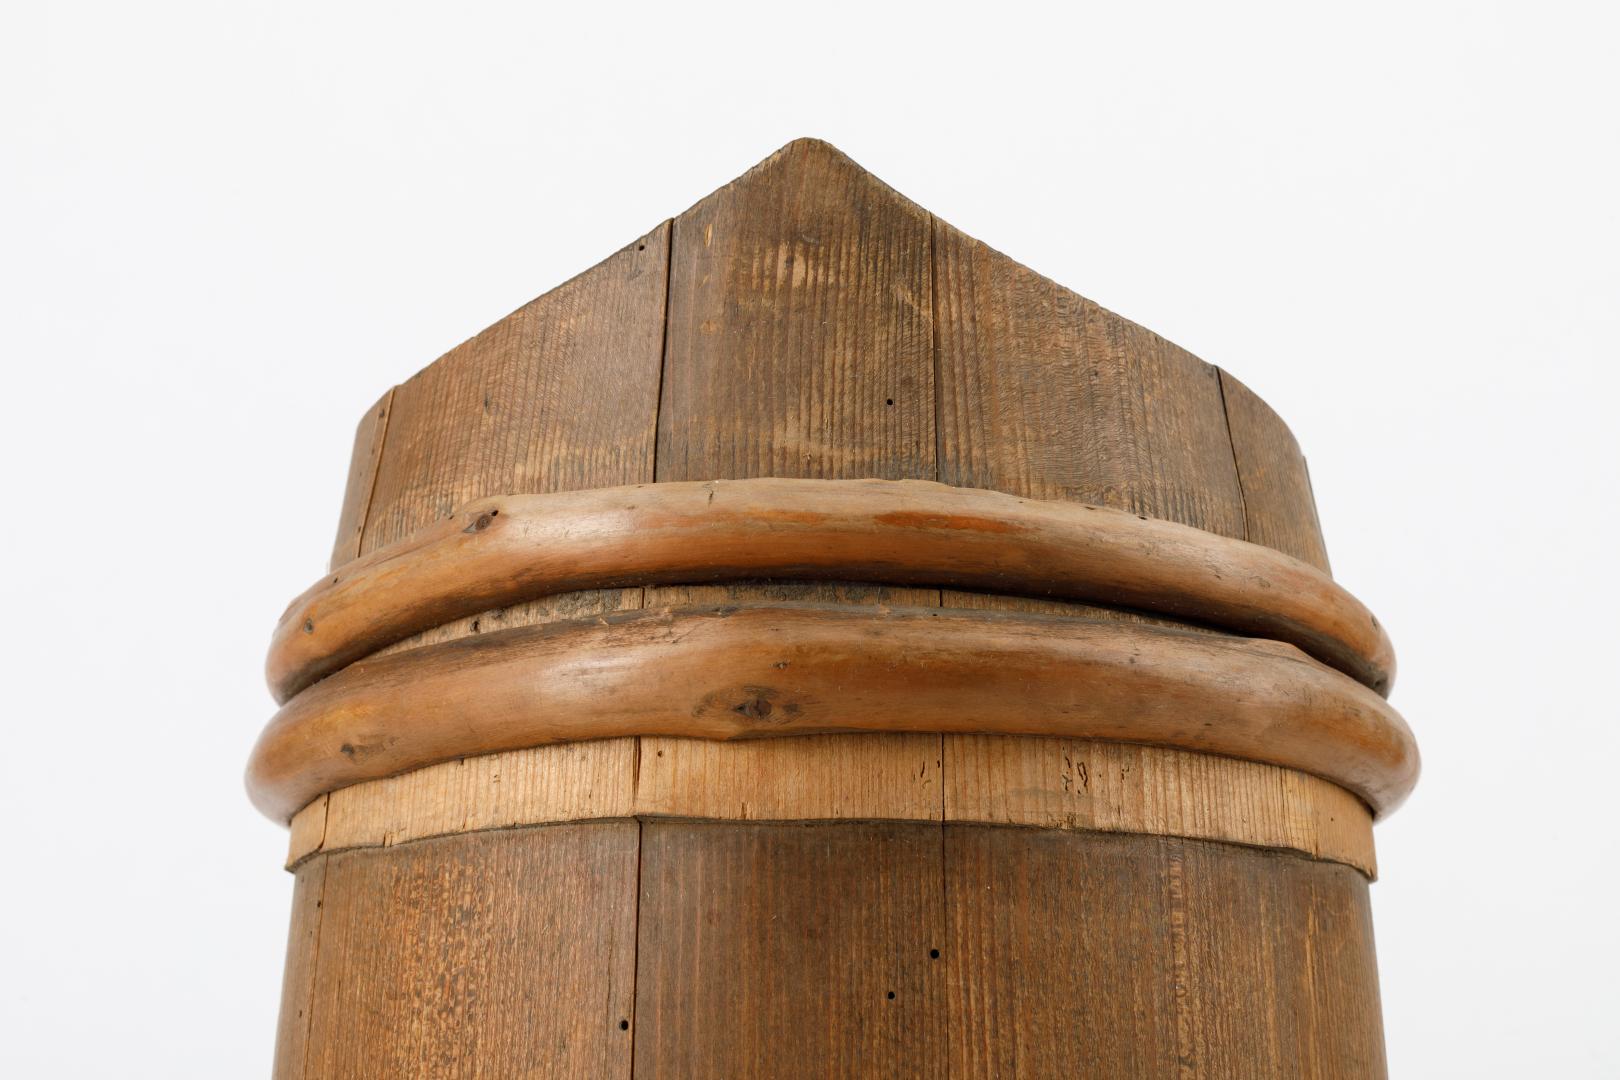 Large wooden konovka (mug)